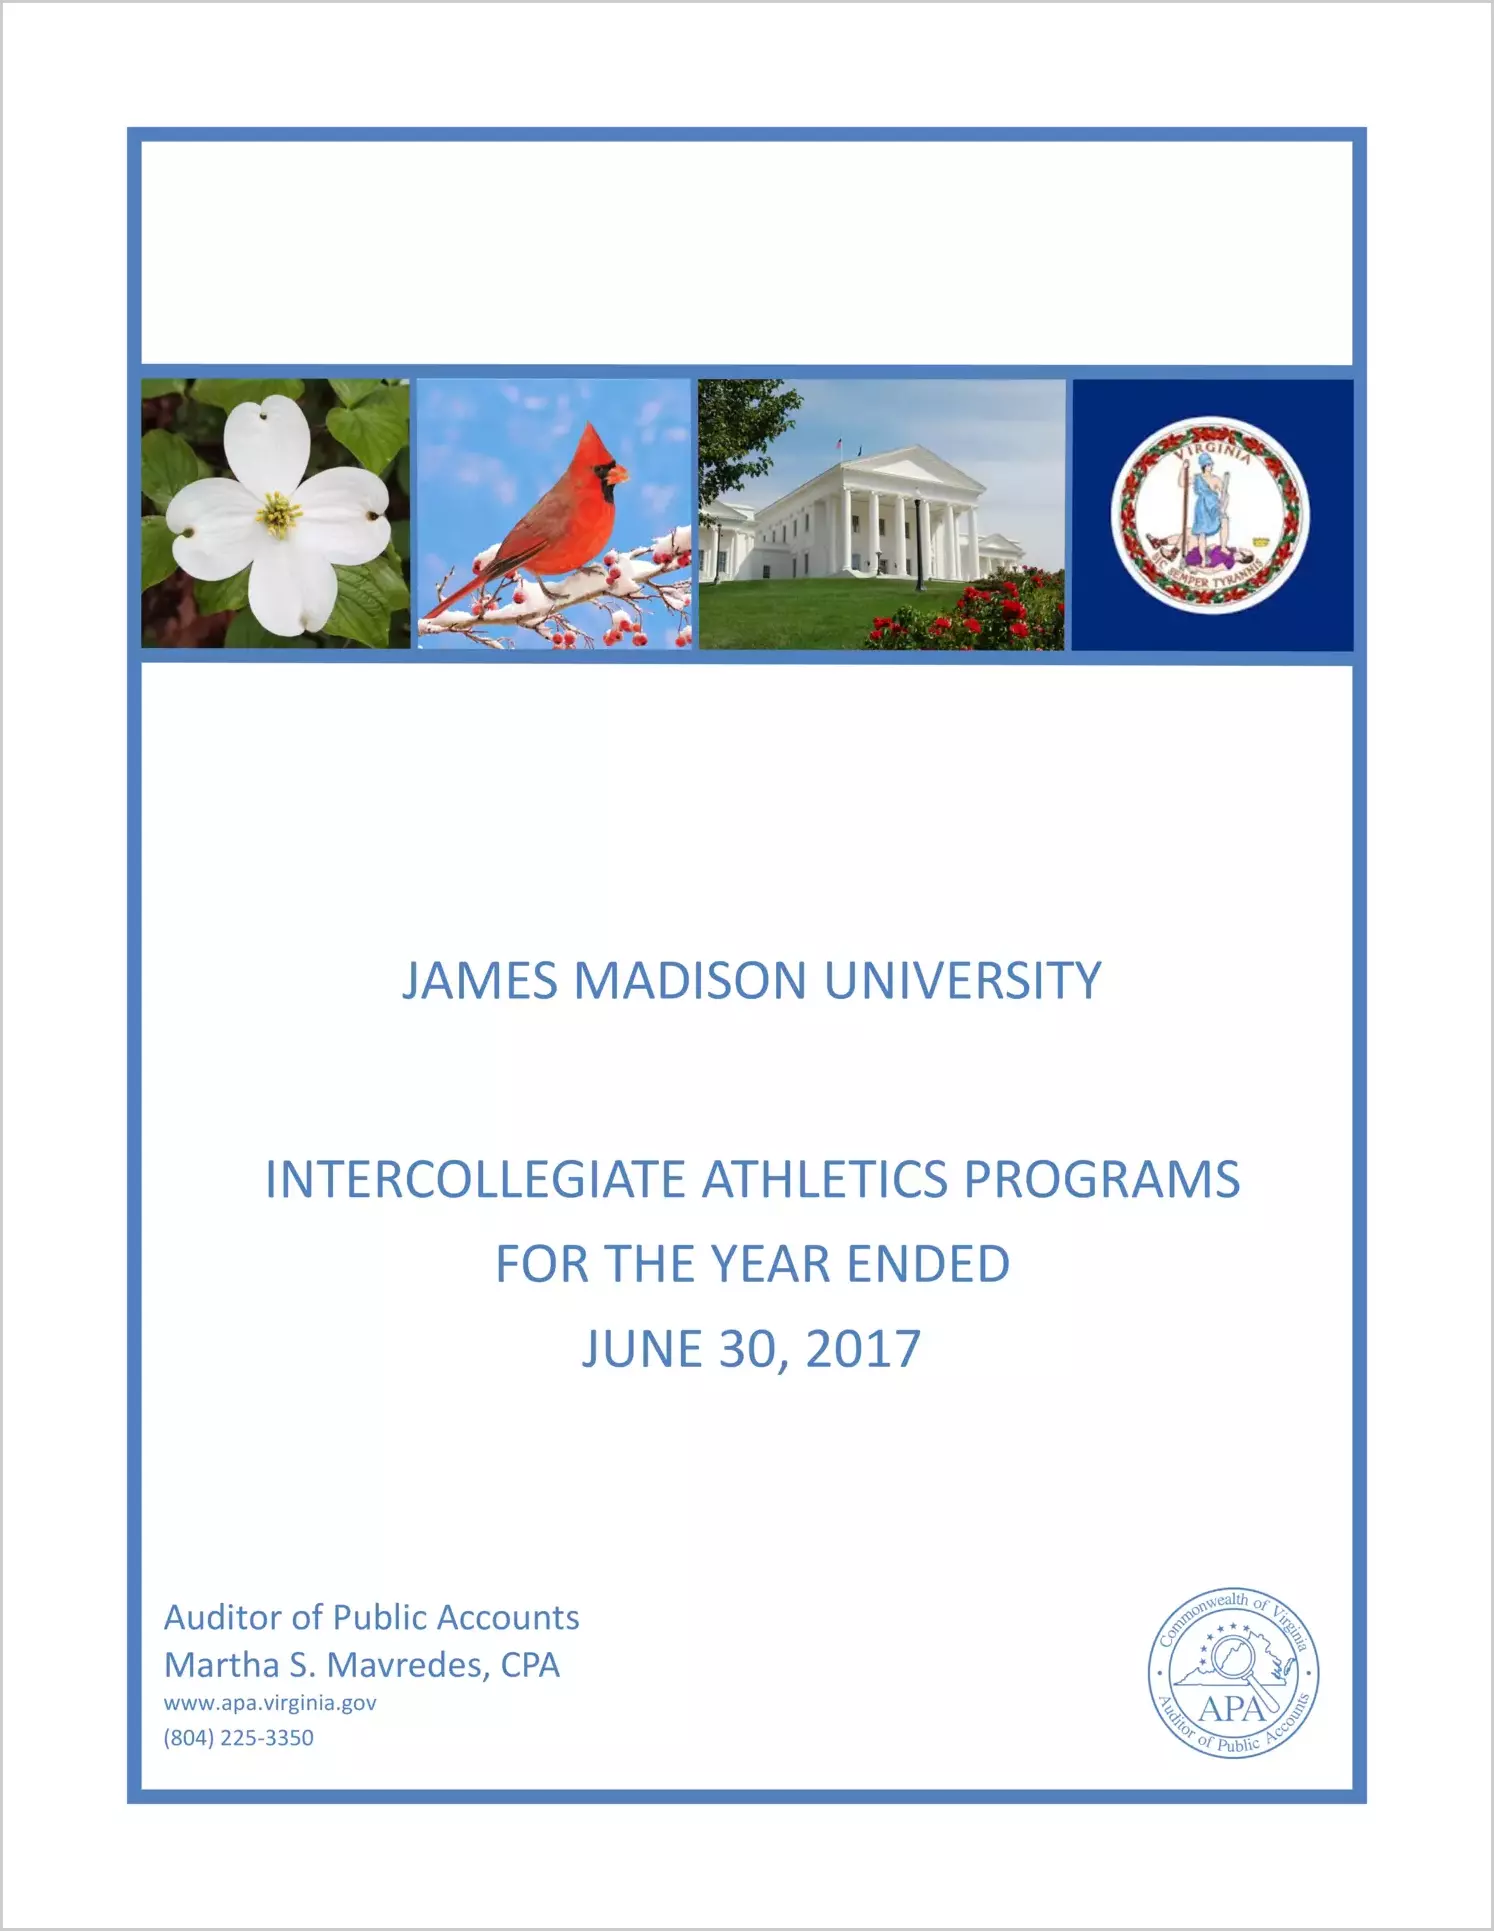 James Madison University Intercollegiate Athletics Programs for the year ended June 30, 2017